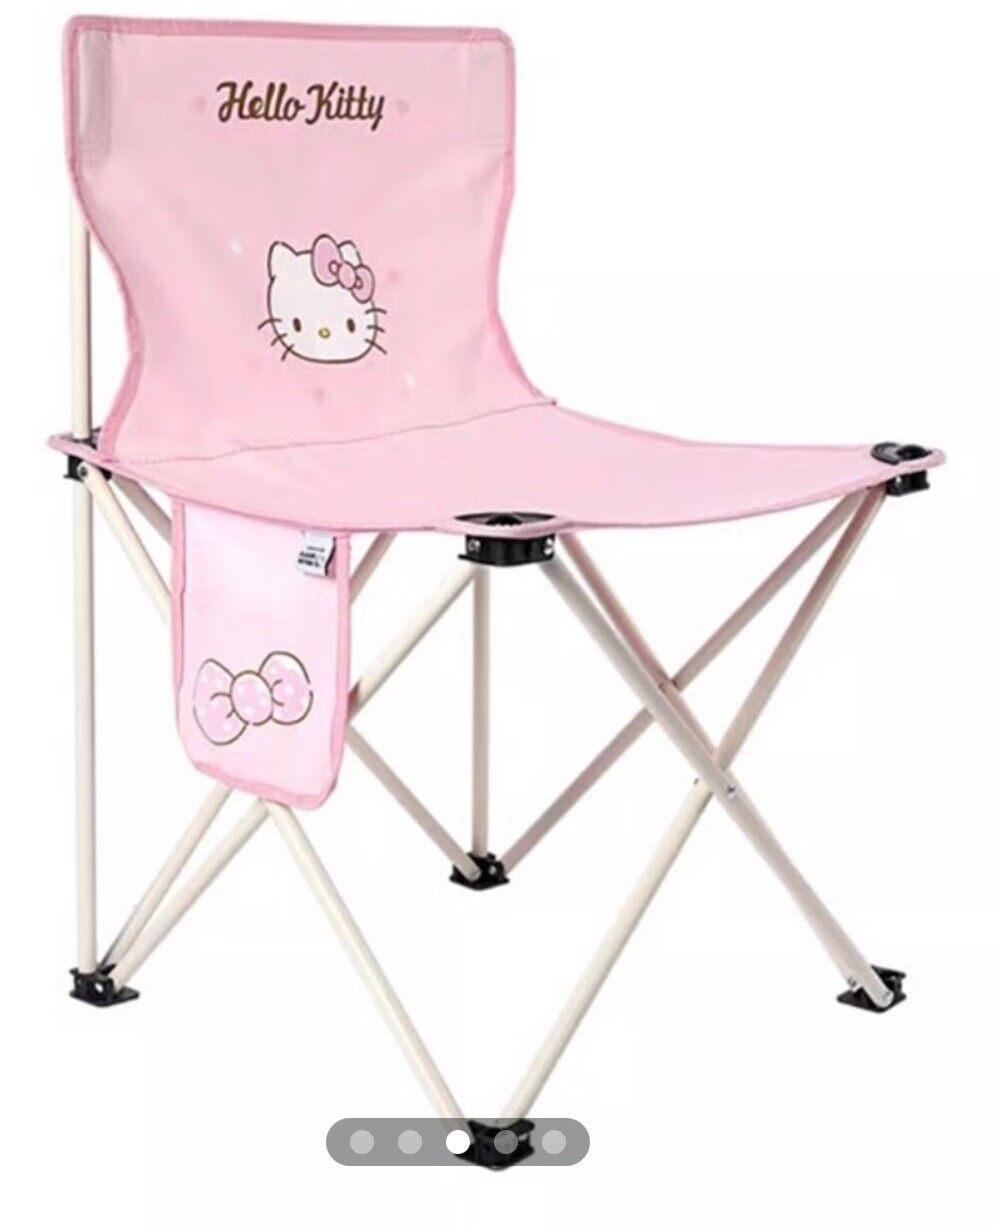 Hello Kitty Folding Chair Sanrio Pink Beach Camping Sports Kawaii Light Weight